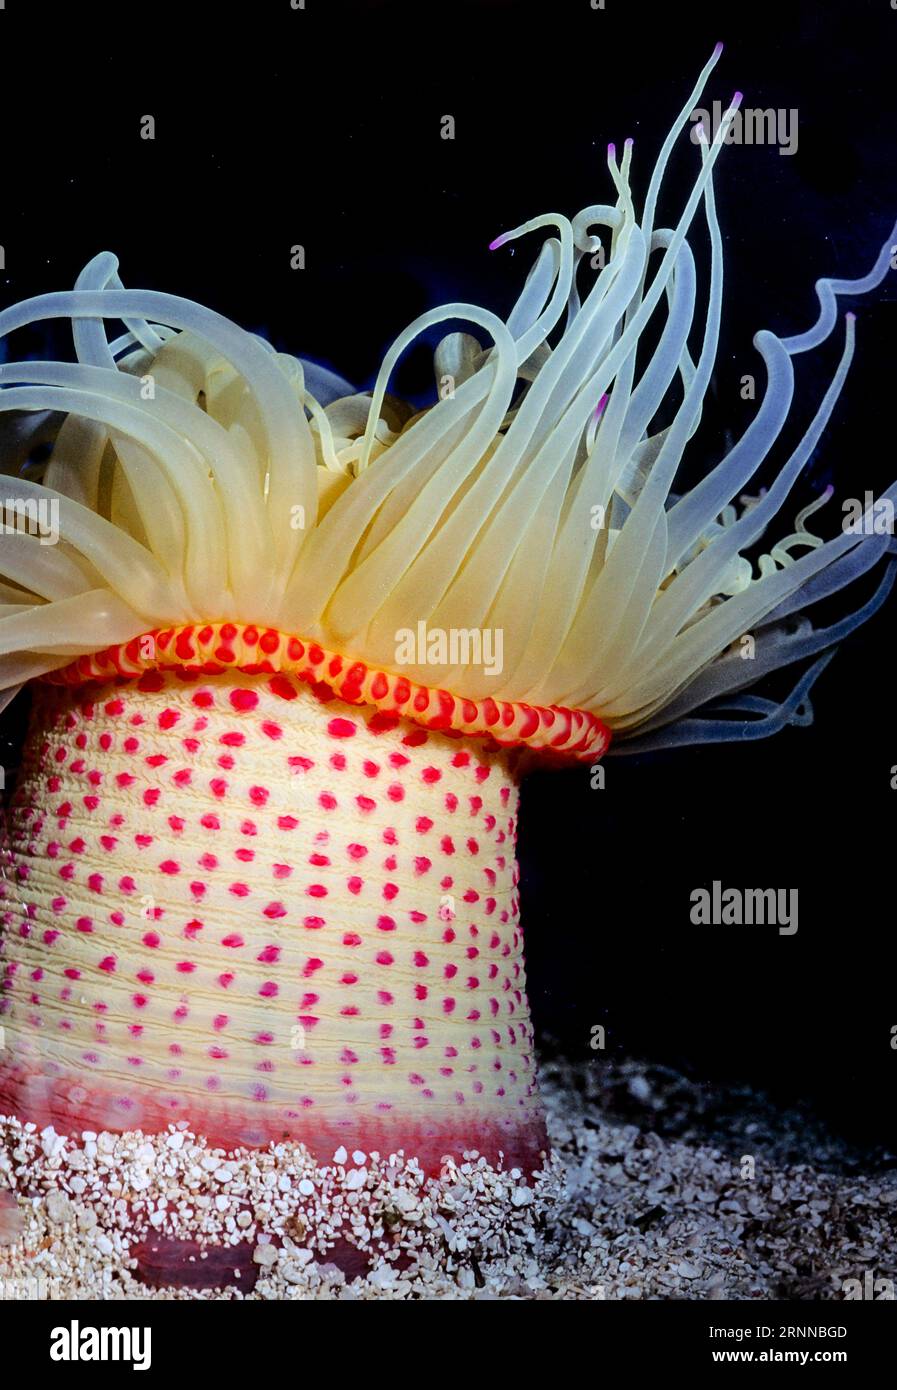 Strawberry anemone (Actinia fragacea). Aquariumphoto. Stock Photo